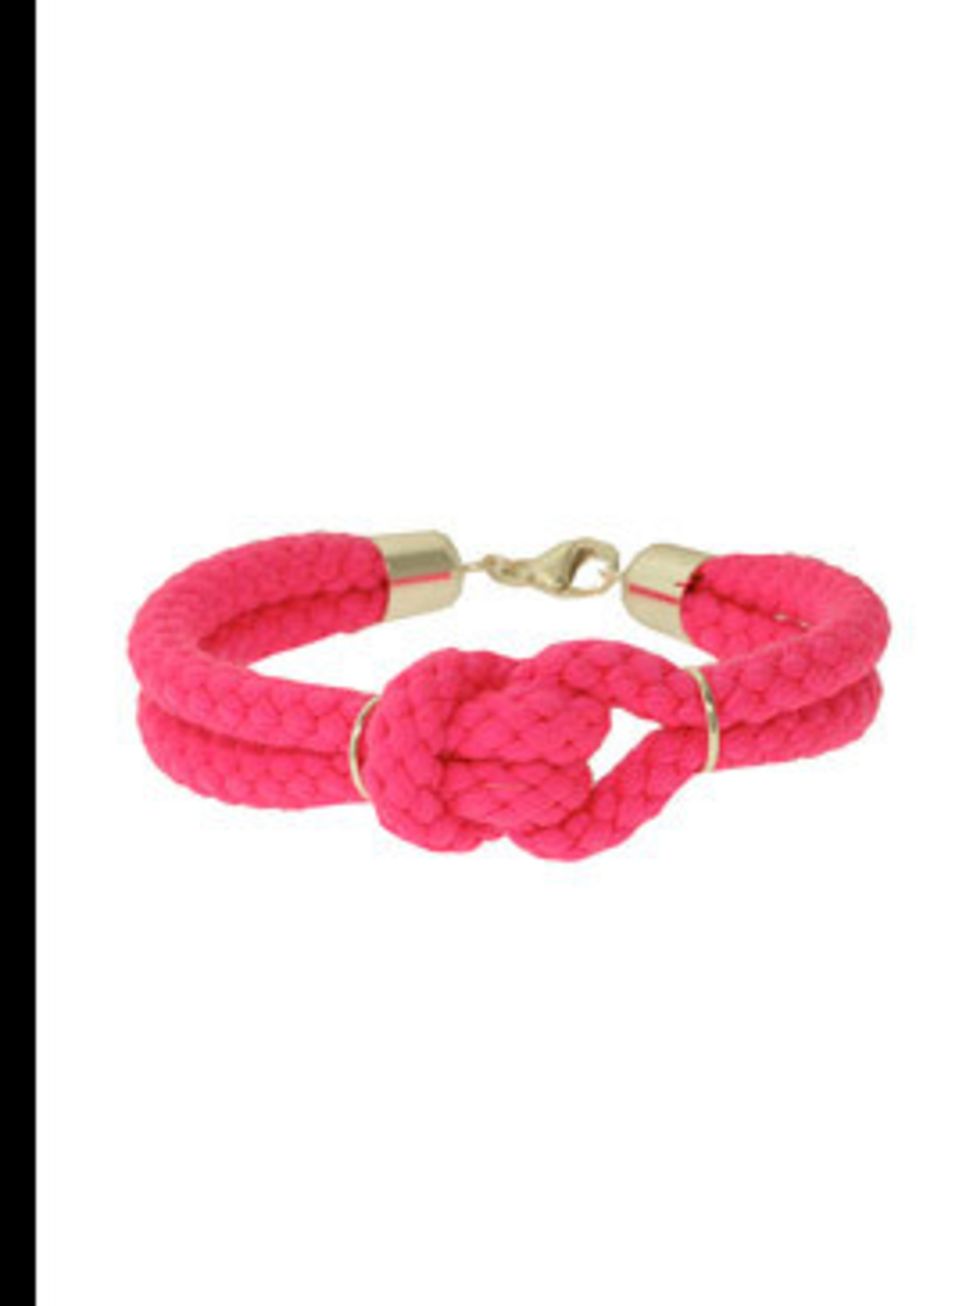 <p>Bracelet, £64 by Sabrine Dehoff at <a href="http://www.kabiri.co.uk/jewellery/bracelets/small_knotted_cord_braceletpink">Kabiri</a></p>